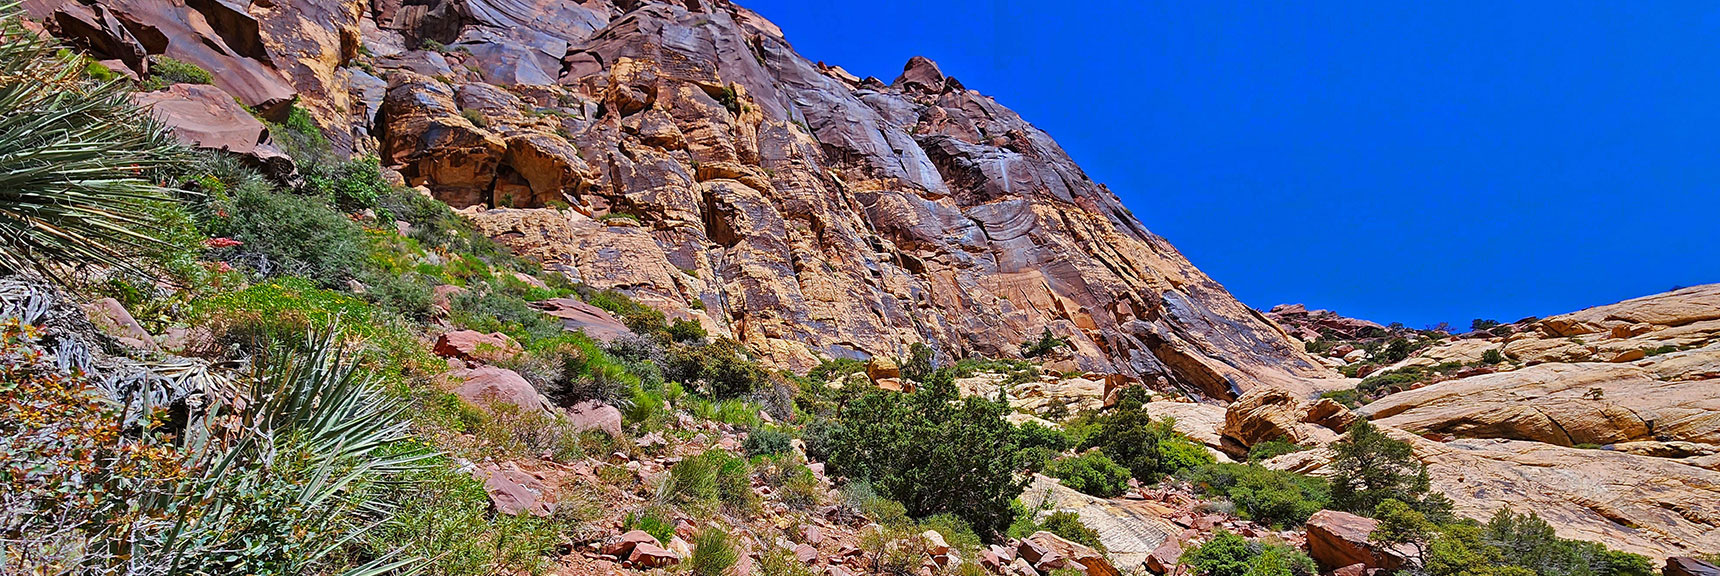 My Goal: Continue Above Sandstone Ledge, Look to Reconnect with Summit Route | Juniper Peak Summit | Rainbow Mountain Wilderness, Nevada | David Smith, LasVegasAreaTrails.com